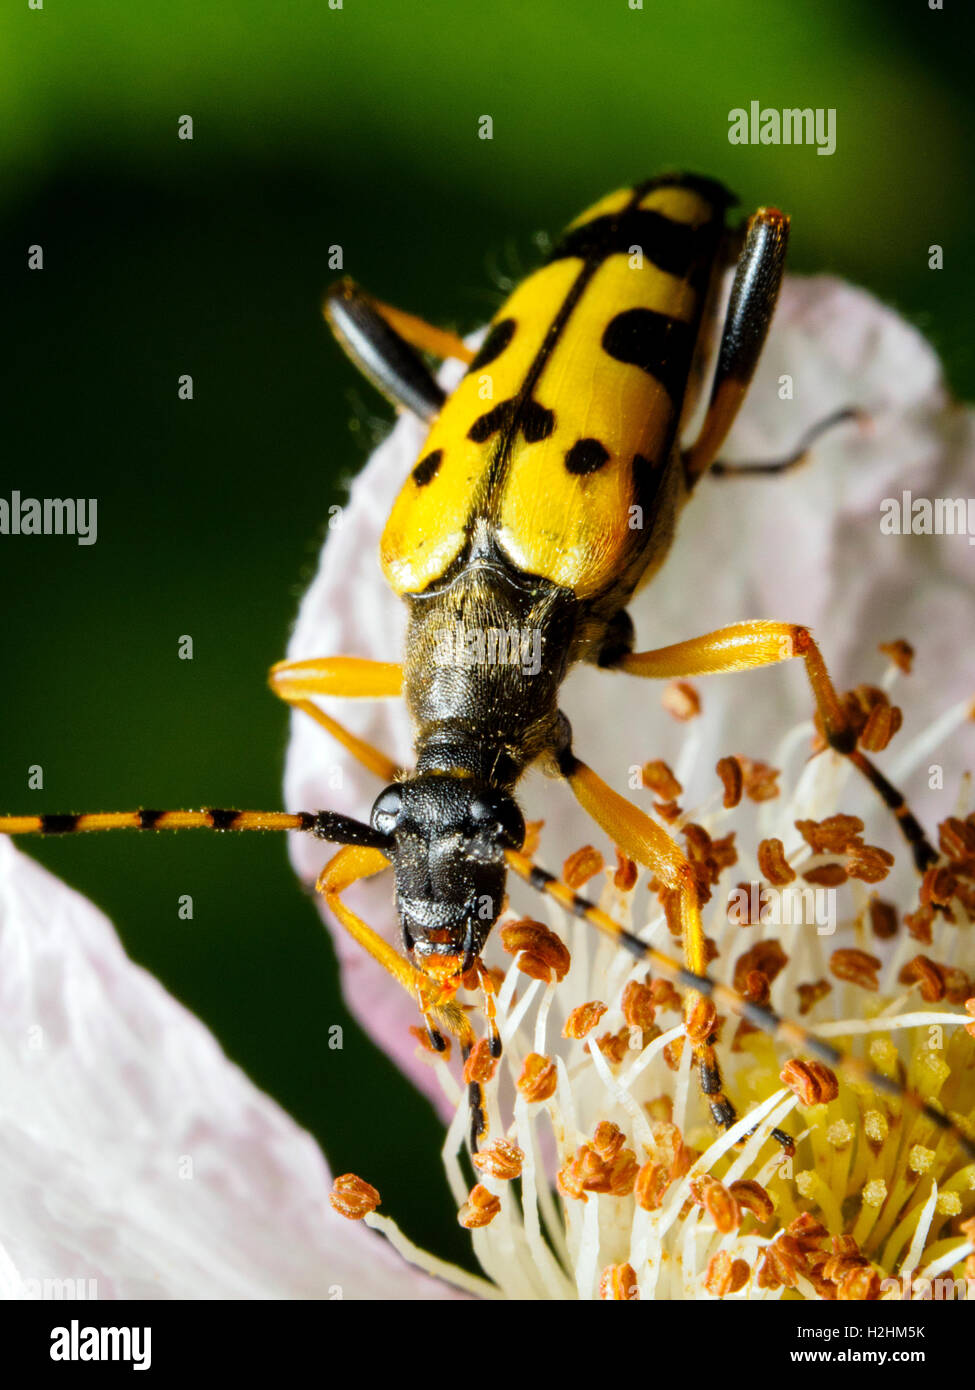 Rutpela maculata longhorn beetle Stock Photo - Alamy